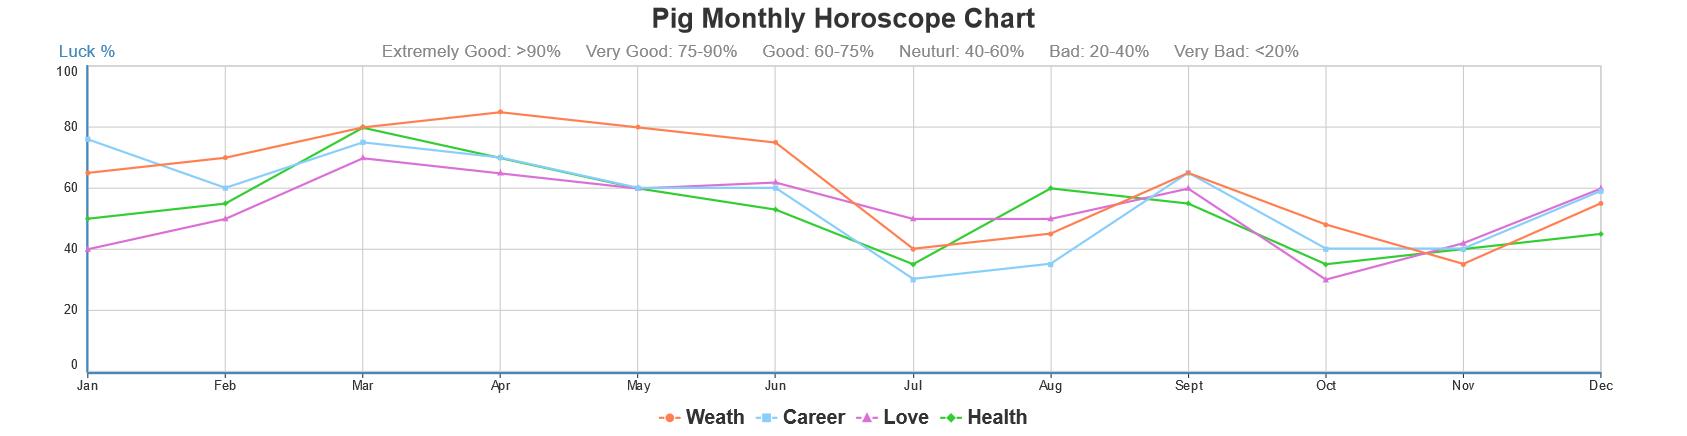 Pig 2019 Horoscope